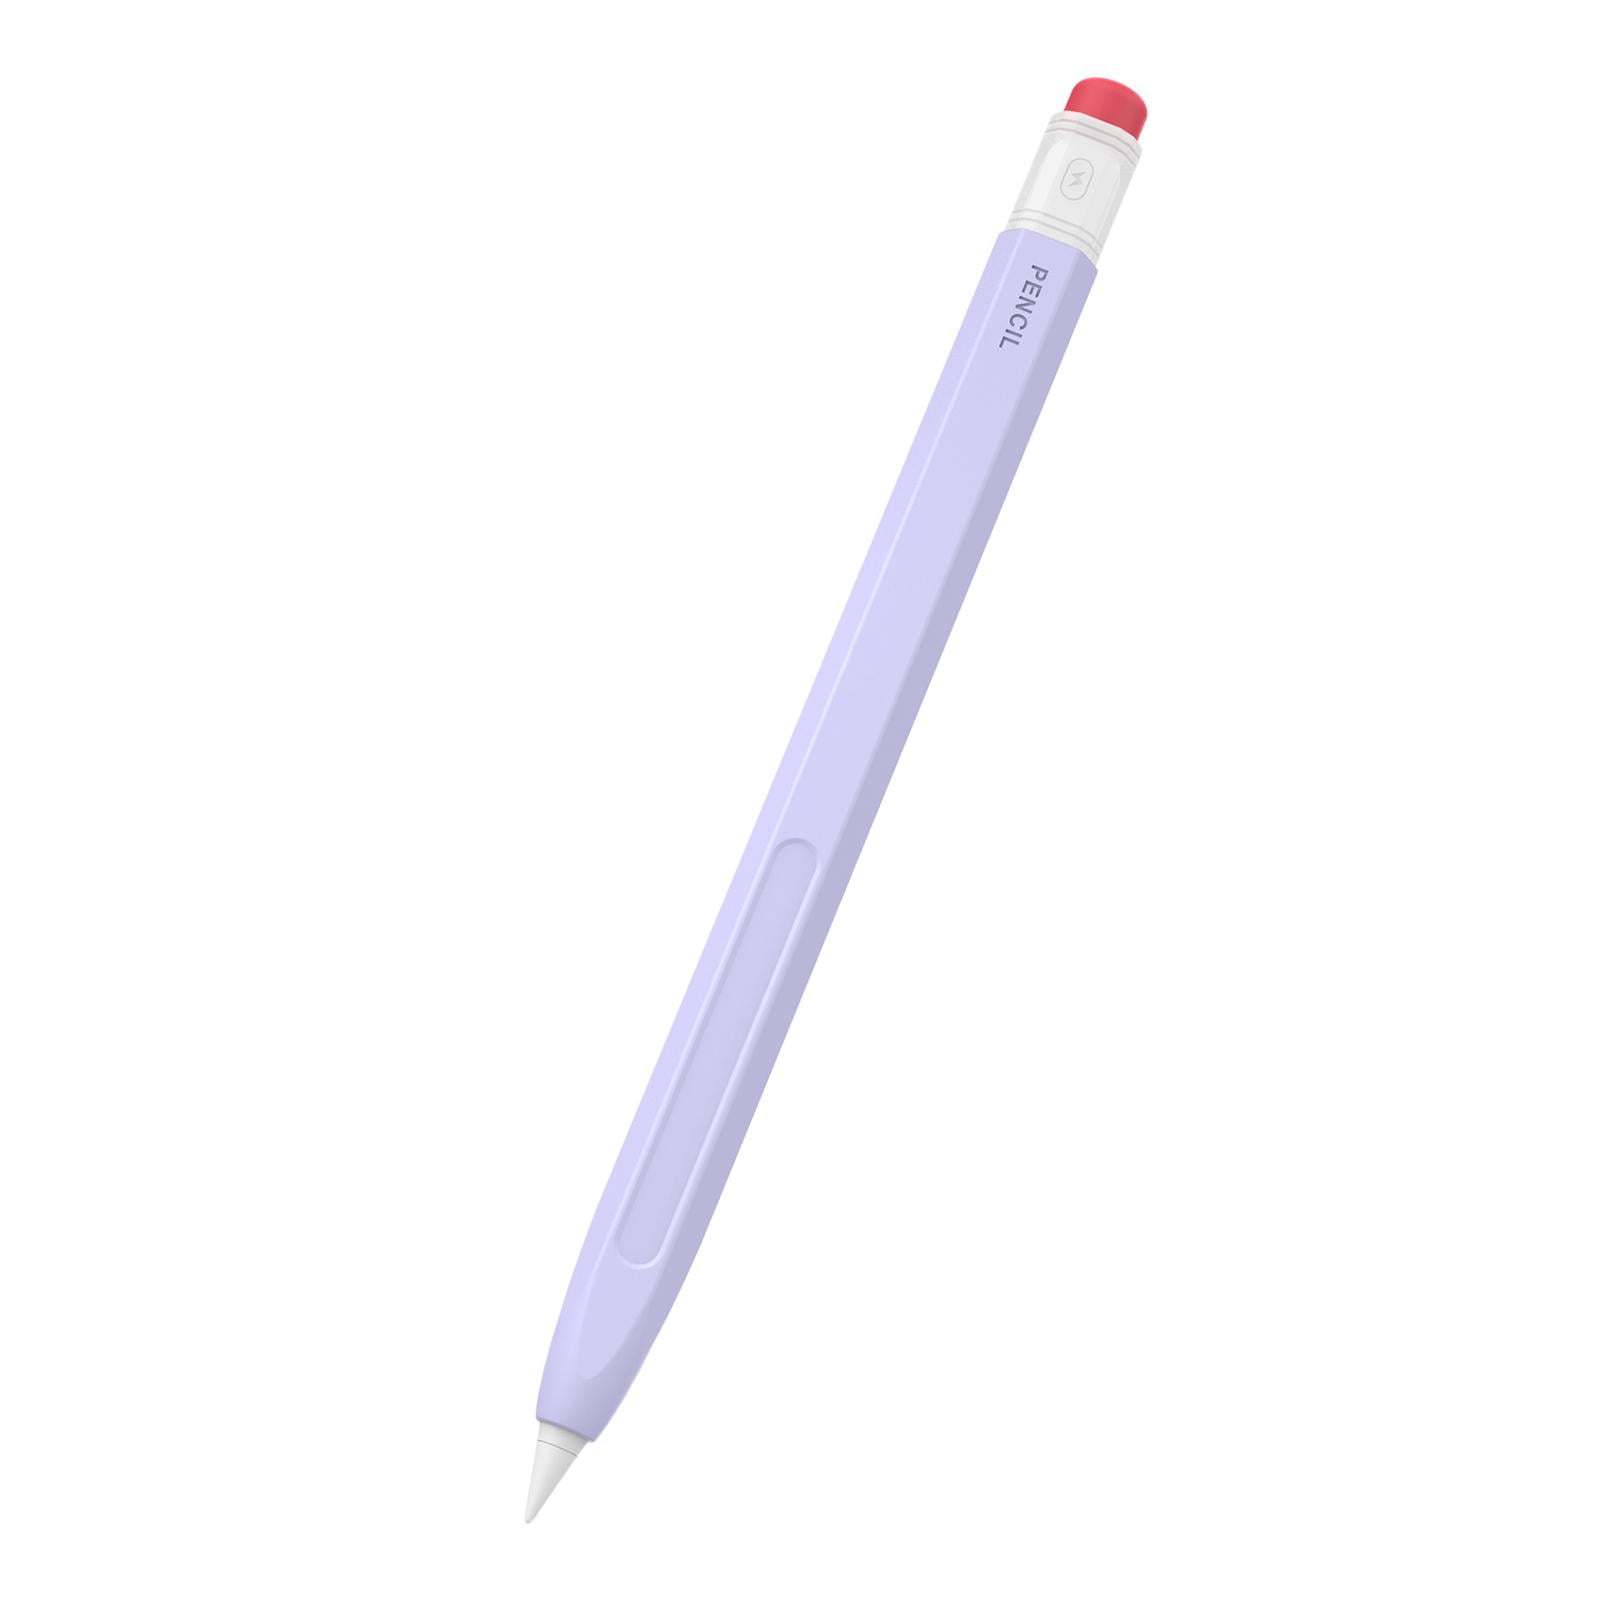 Notebook Pen Holder, Pack of 3, Portable Elastic Pen Bag